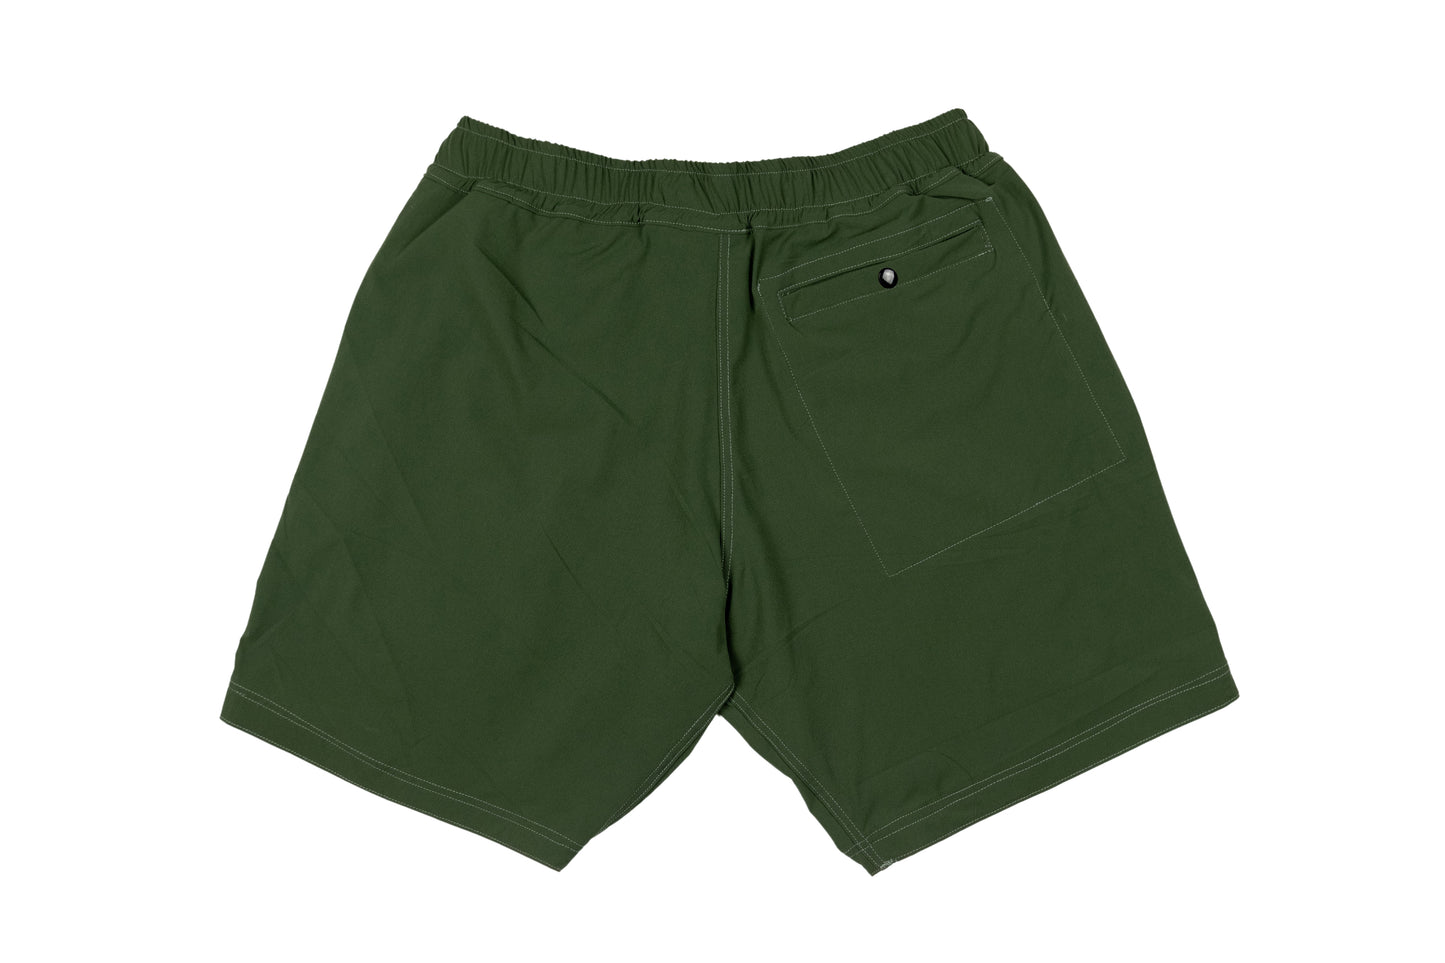 GW All-Rounder Nylon Shorts (Pine Green)